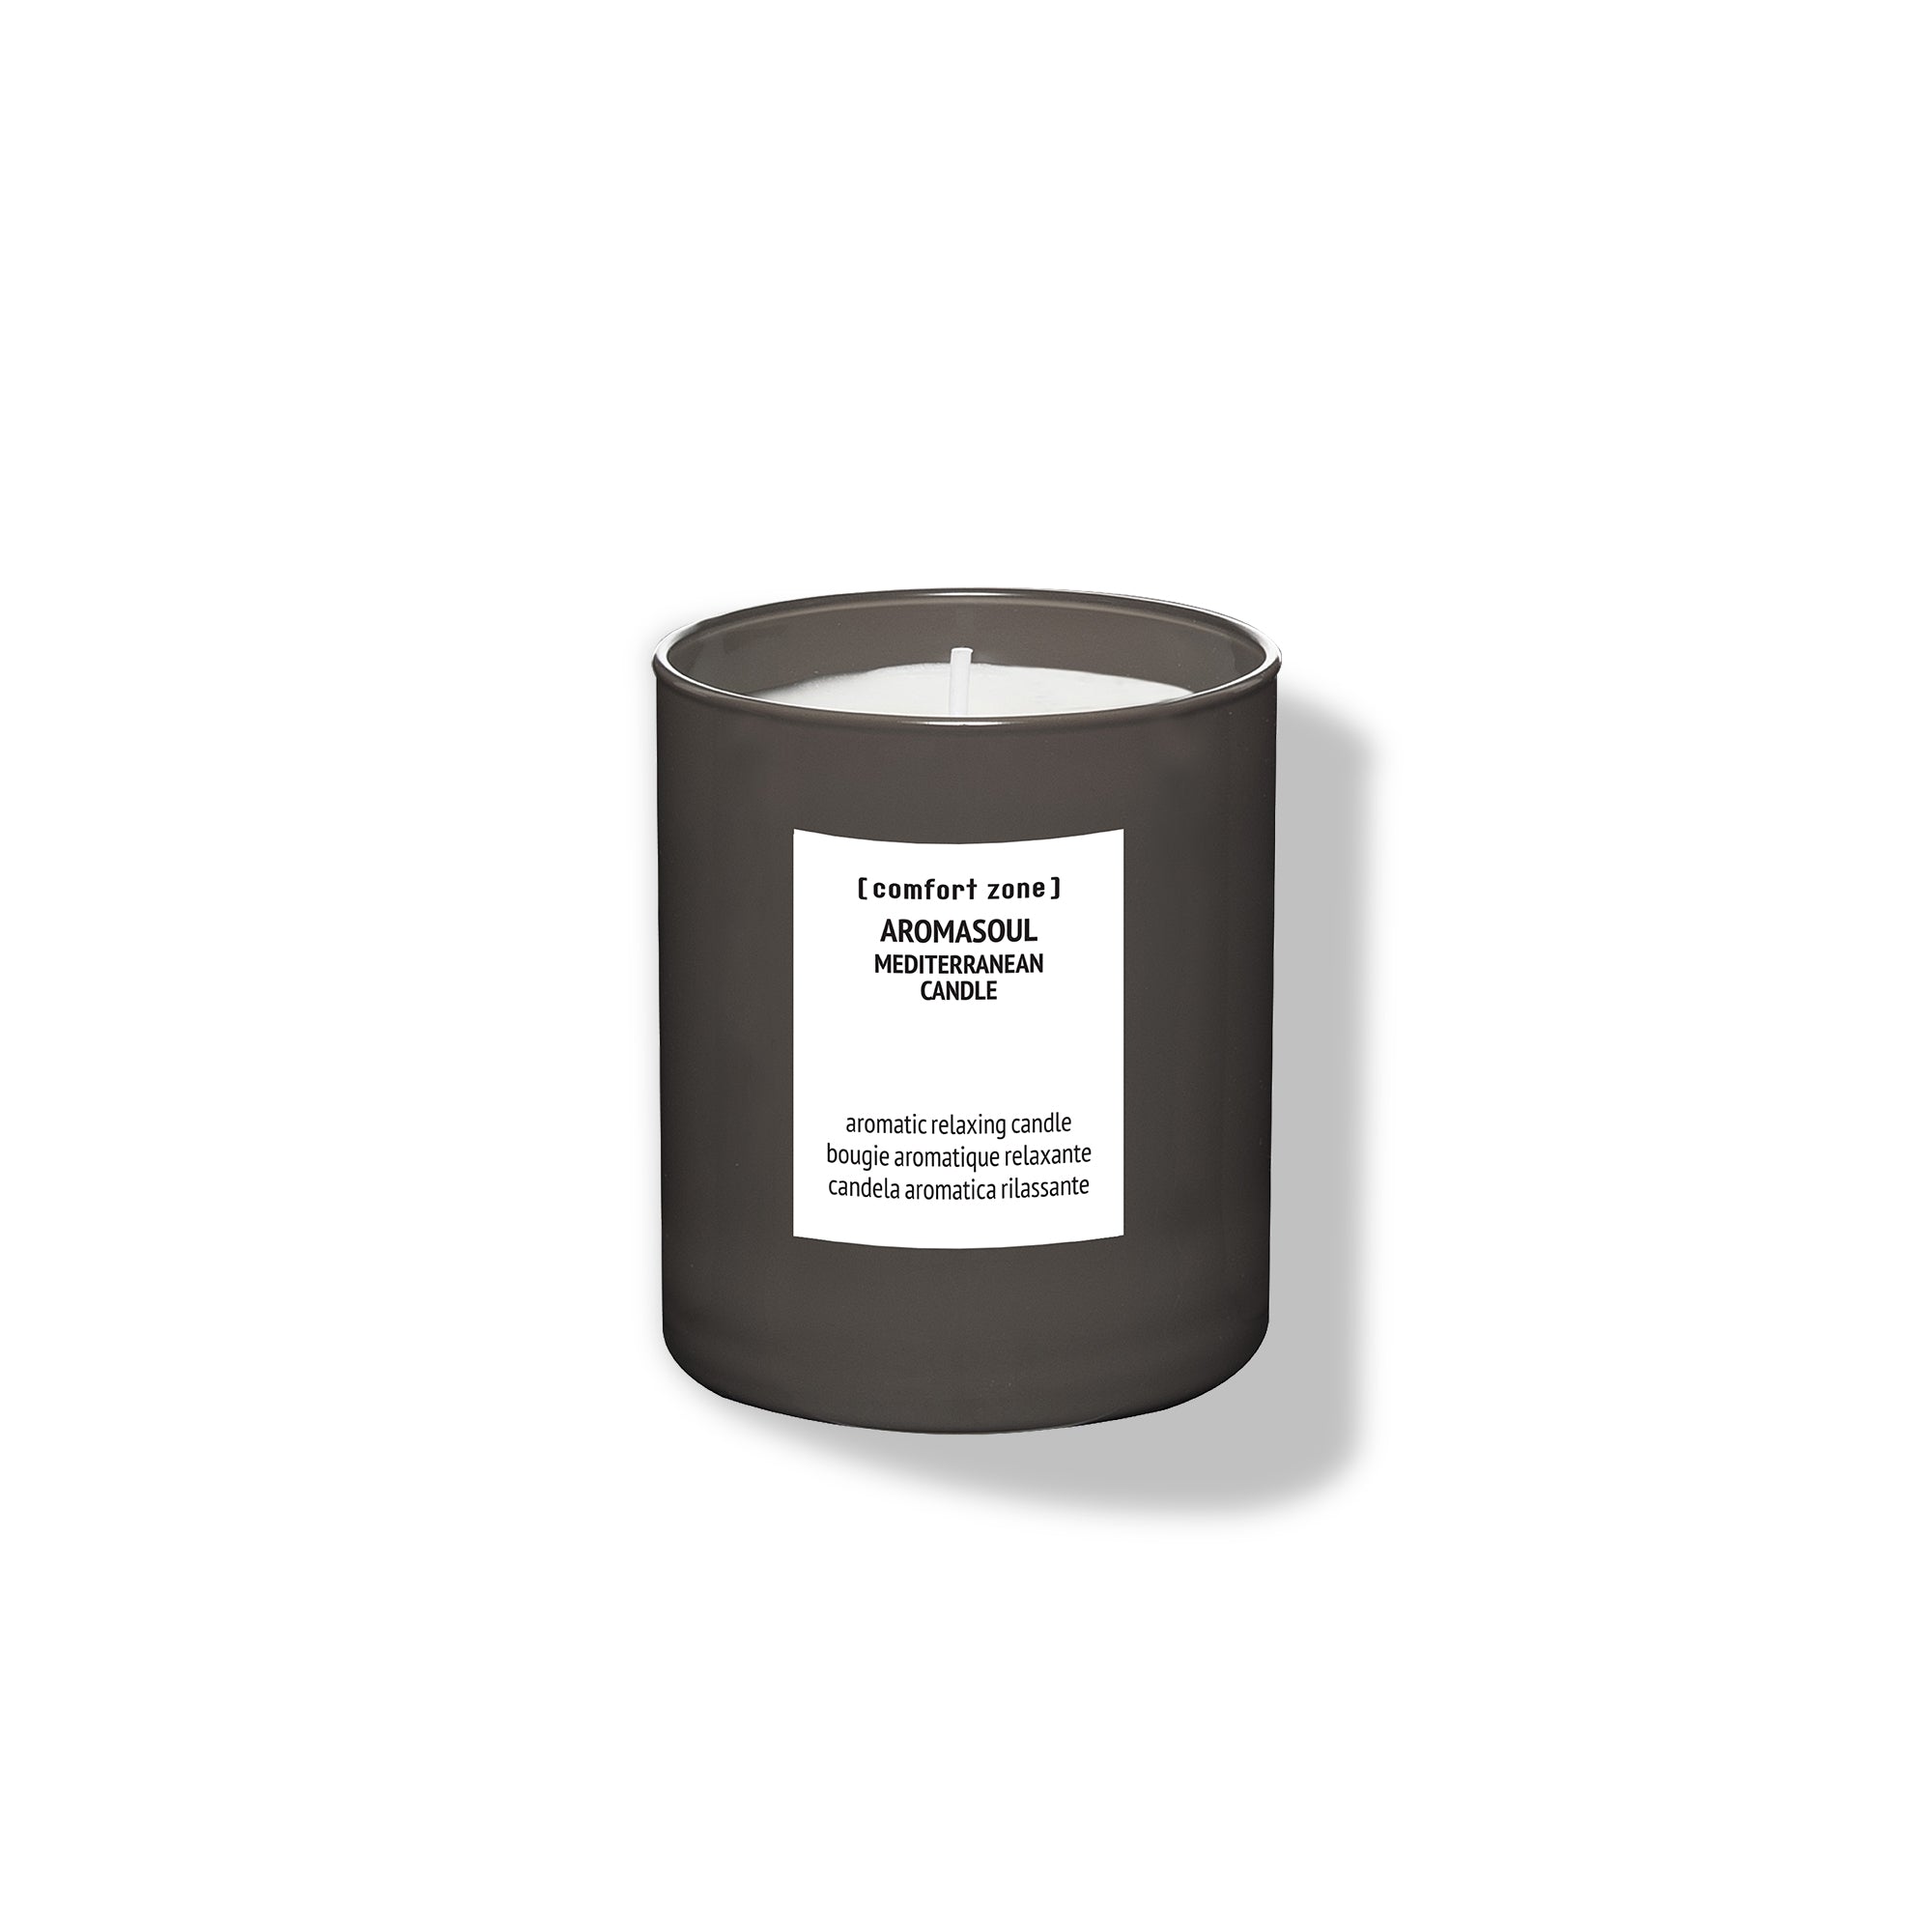 Comfort Zone: AROMASOUL MEDITERRANEAN CANDLE Candela aromatica rilassante-
